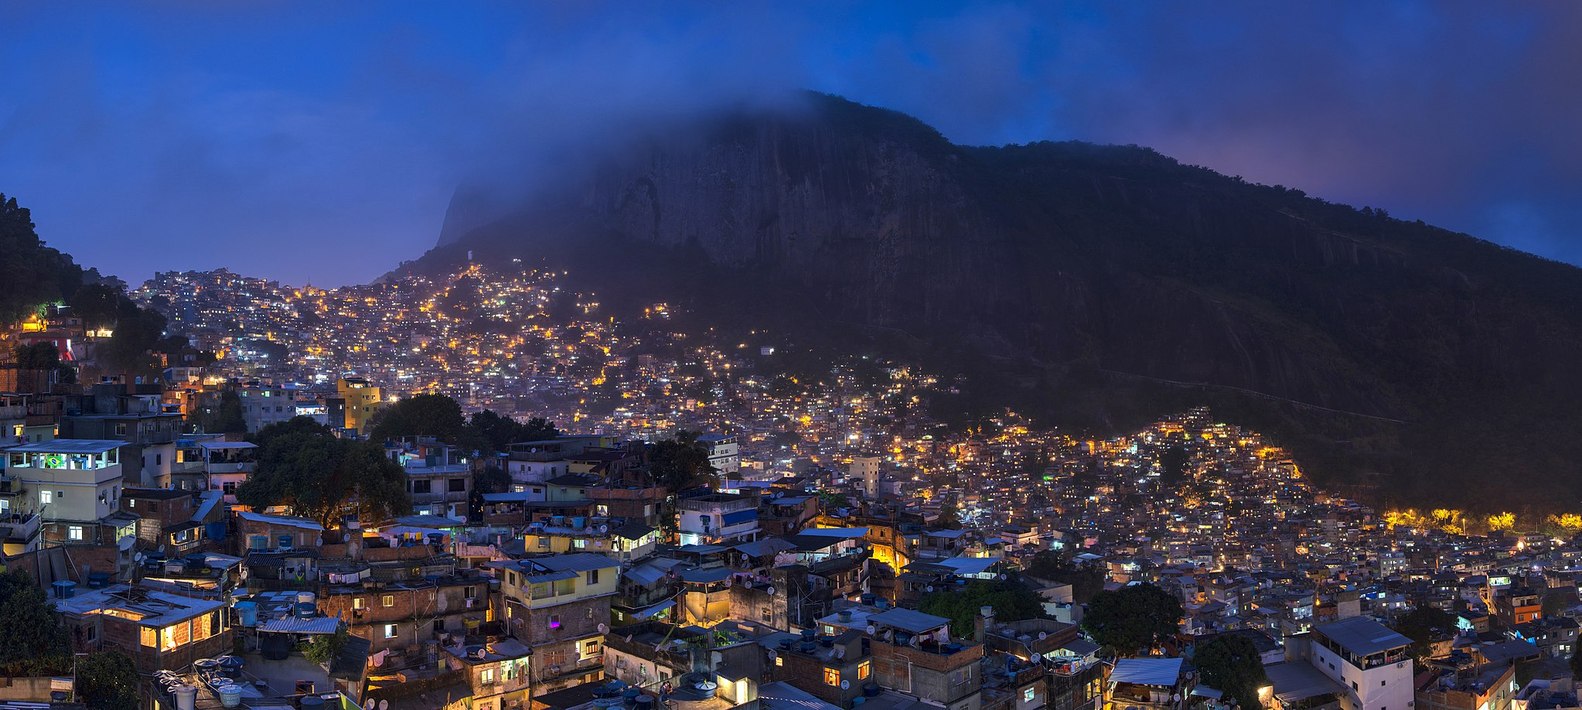 rocinha, favela de rio de janeiro 